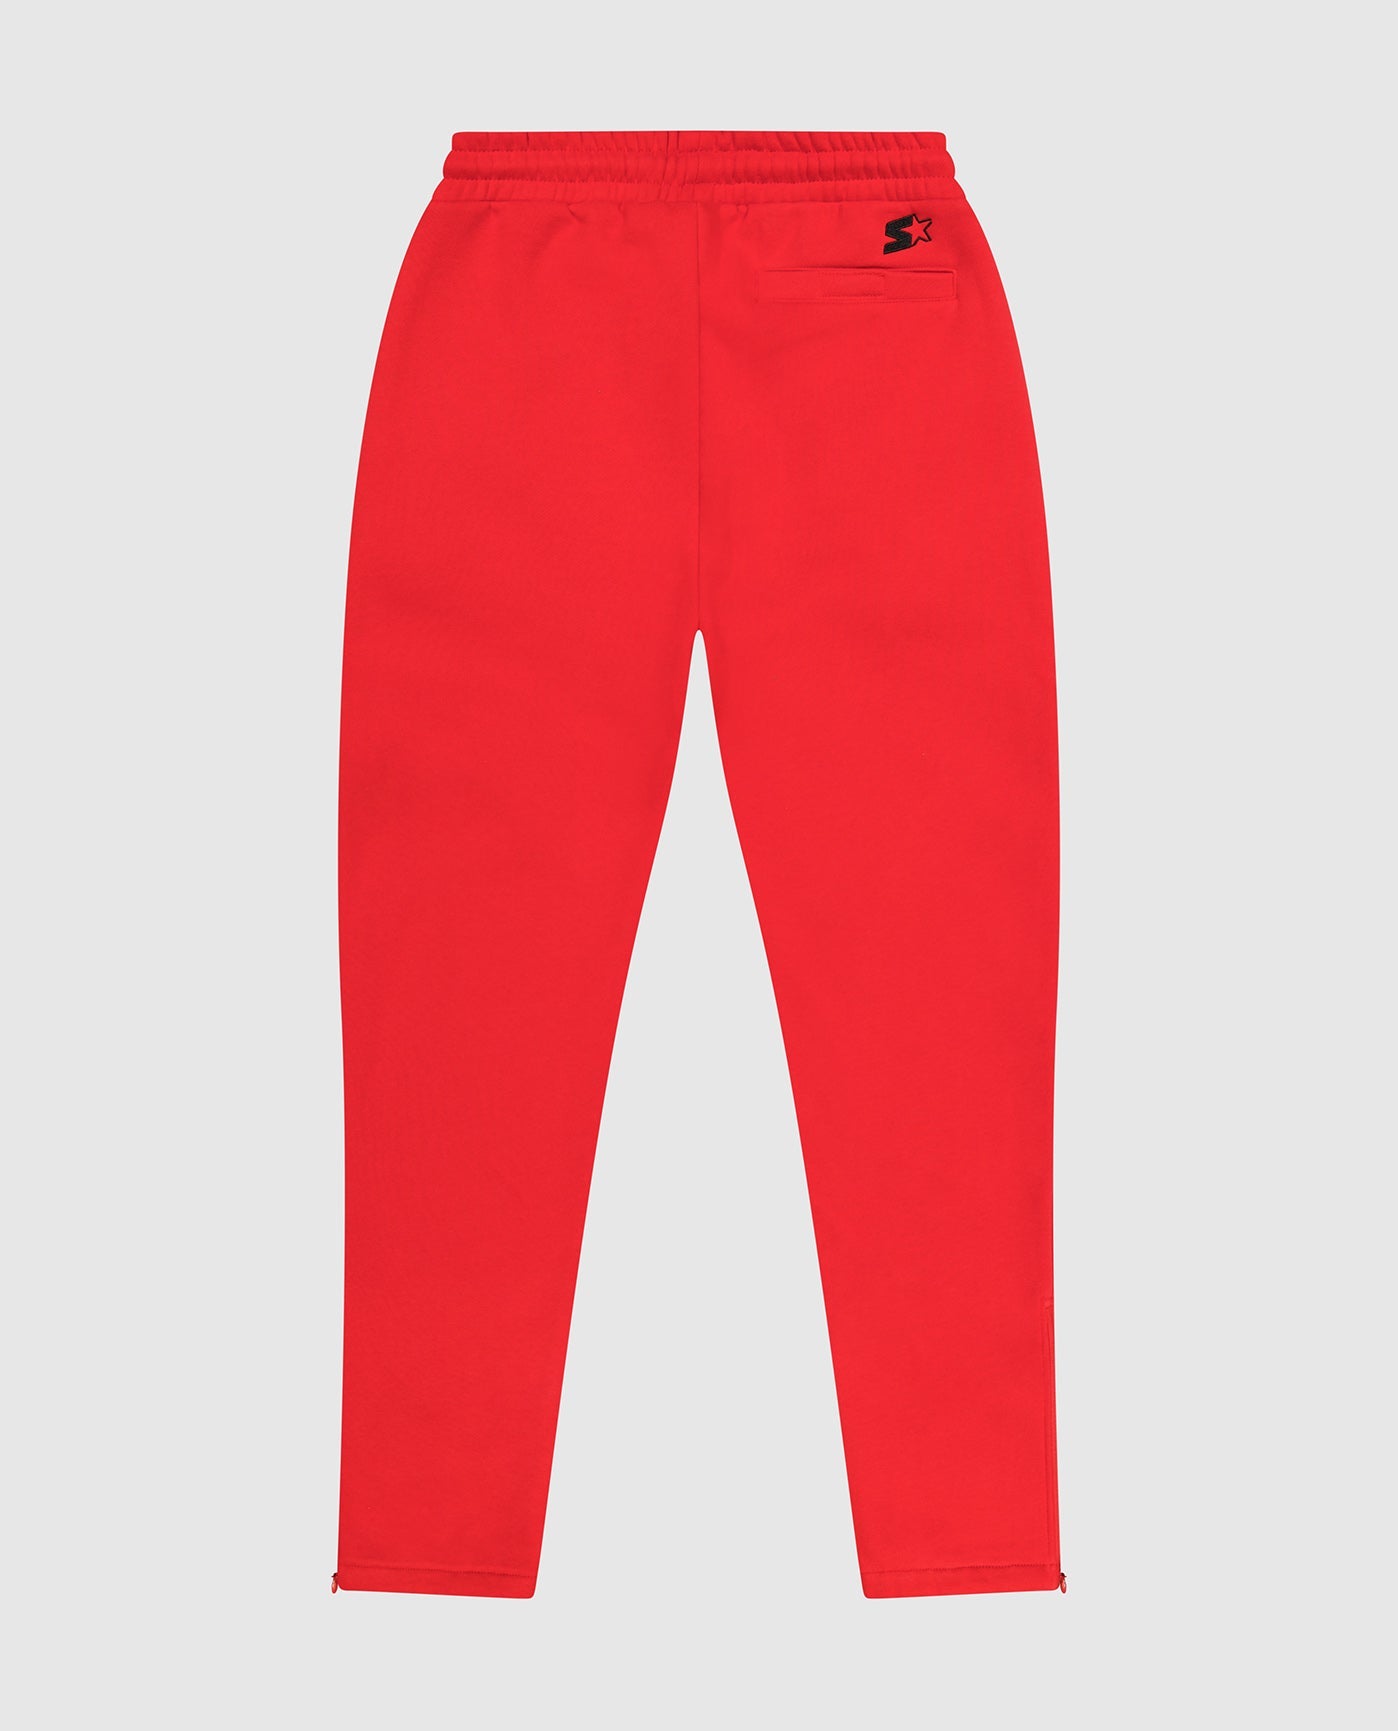 Red sweatpants